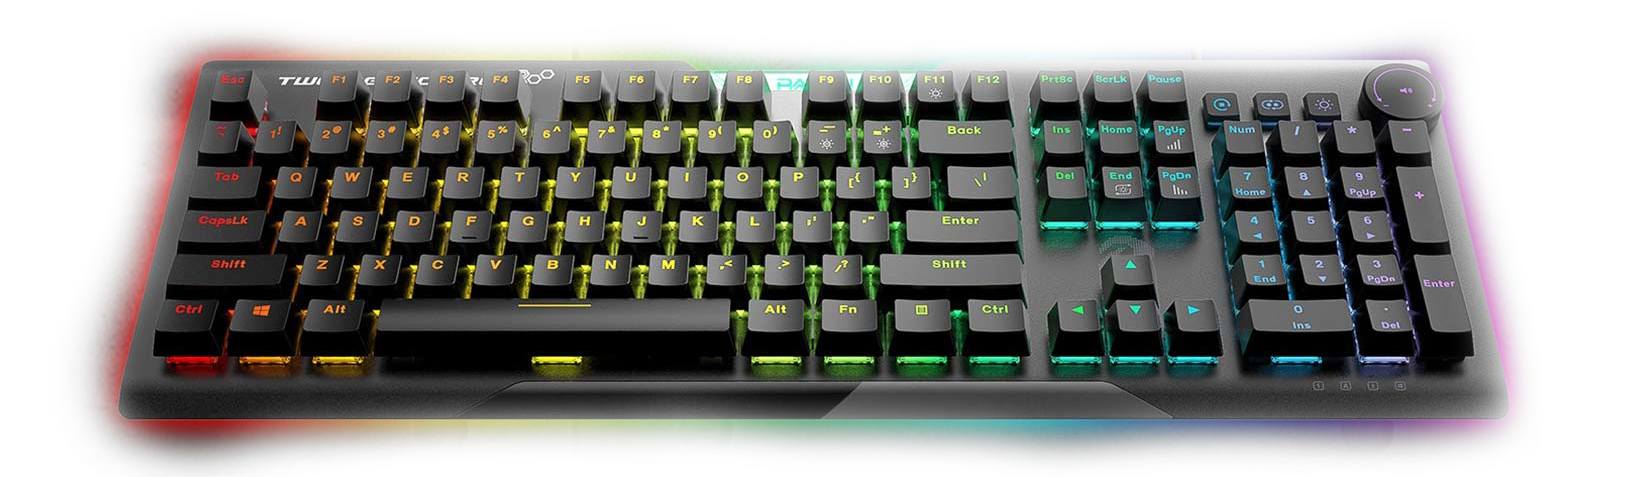 Dareu Gaming Keyboard